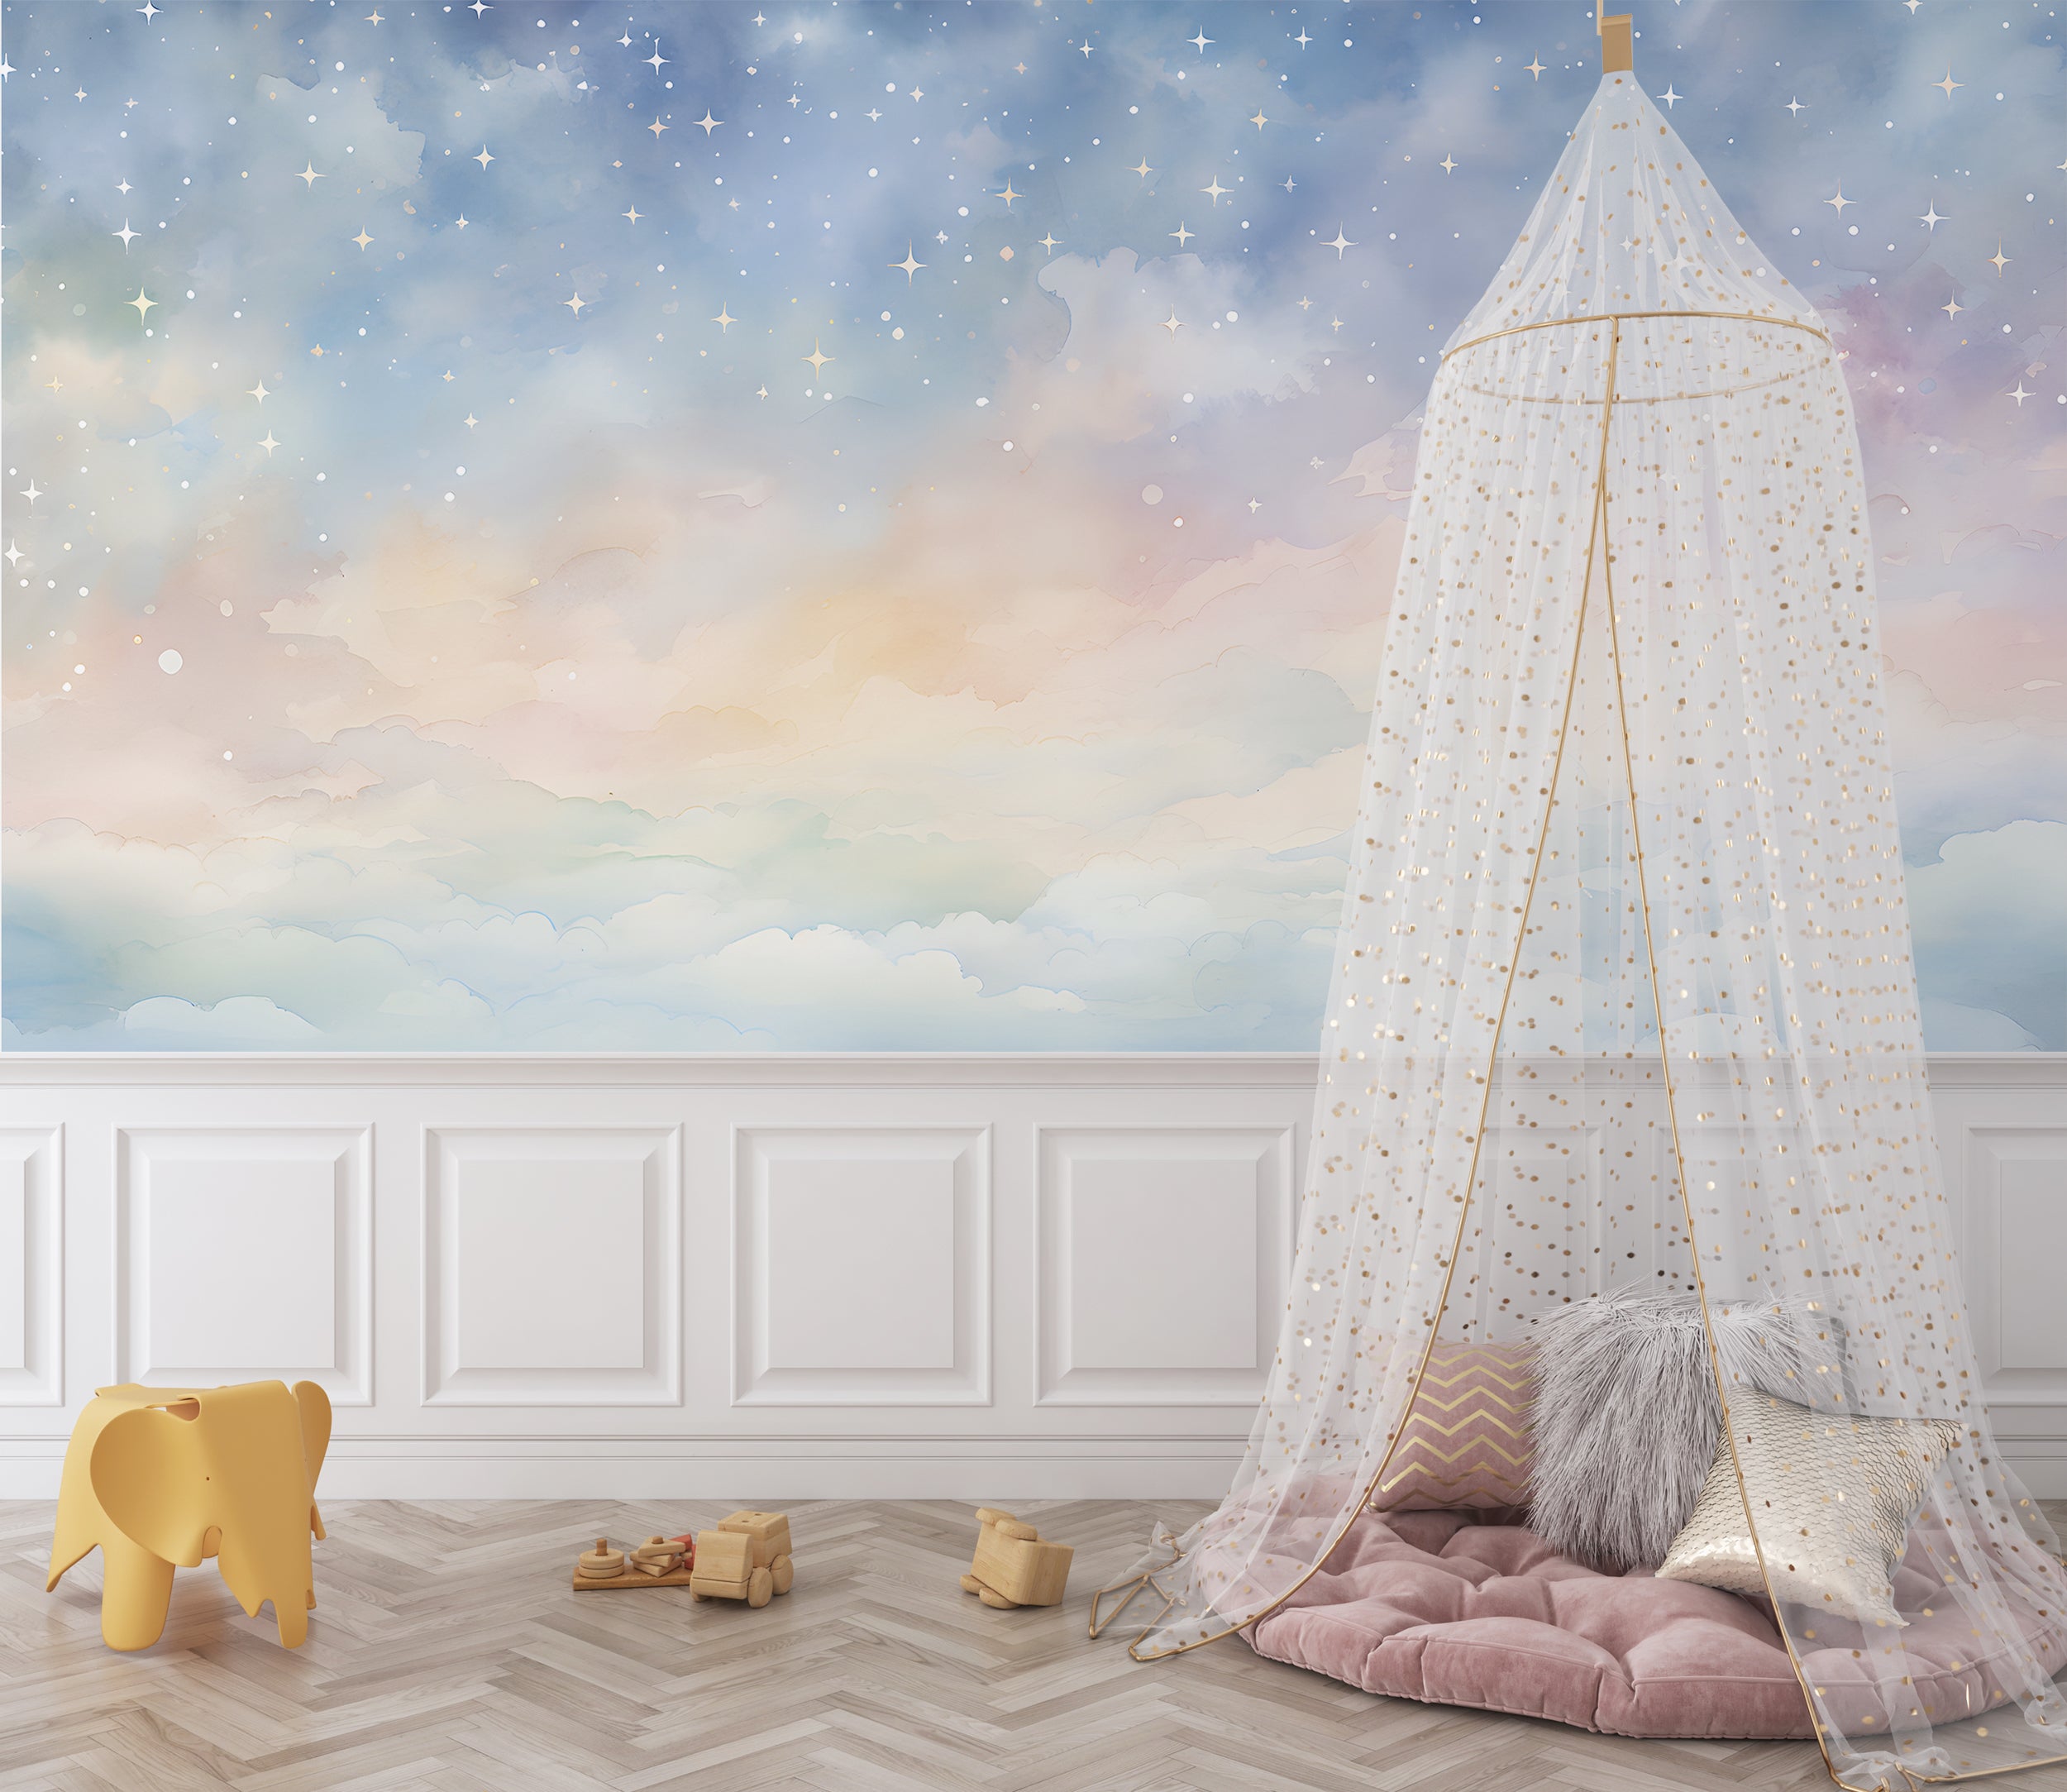 Imaginative Kids' Room Celestial Theme